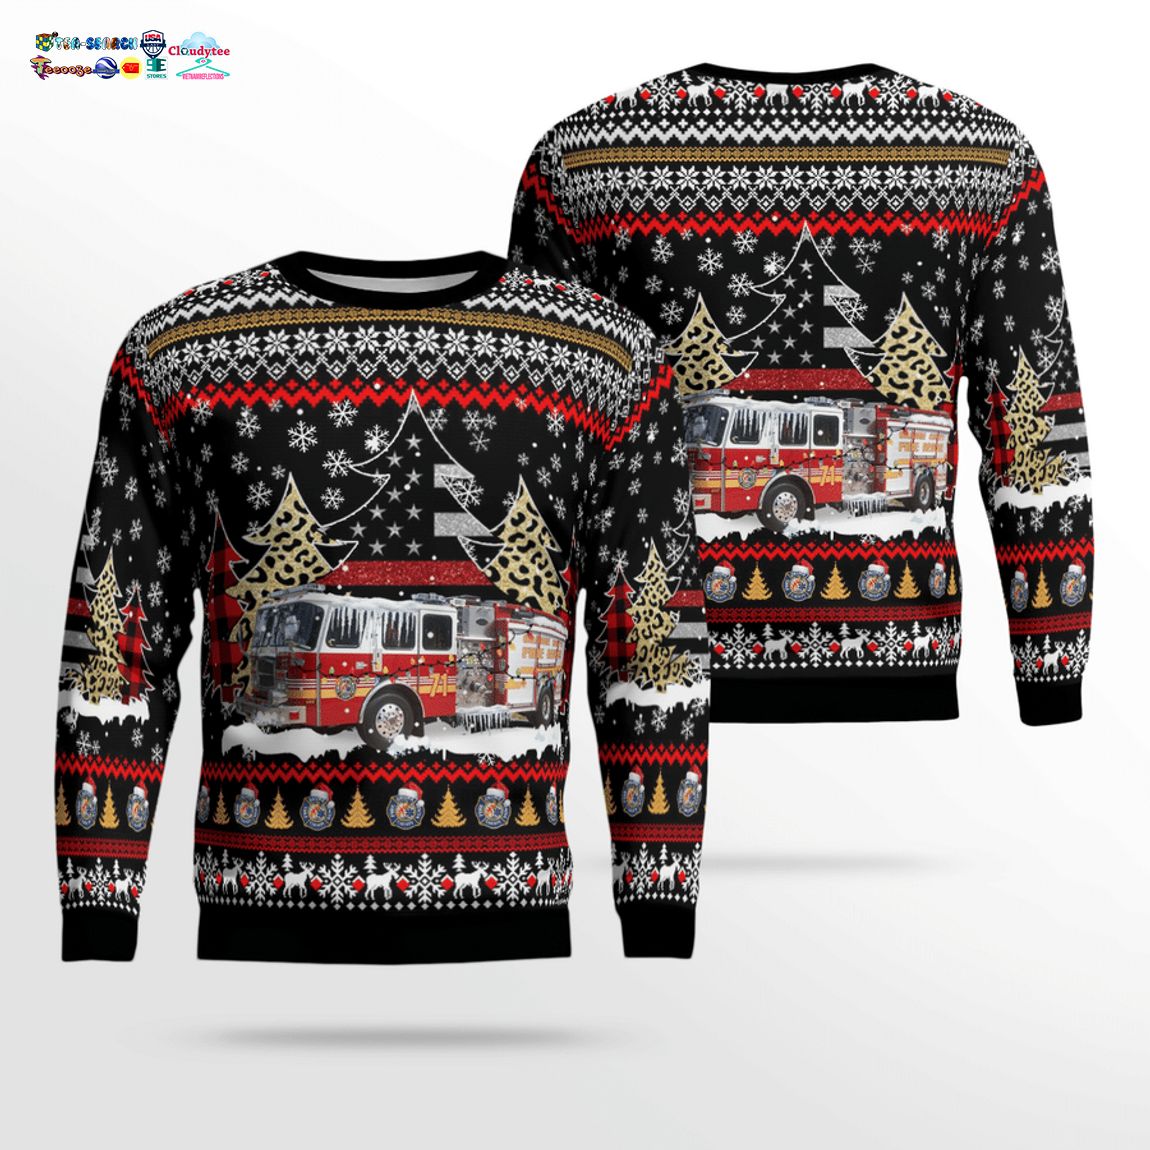 Florida Orange County Fire Rescue Department 3D Christmas Sweater – Saleoff